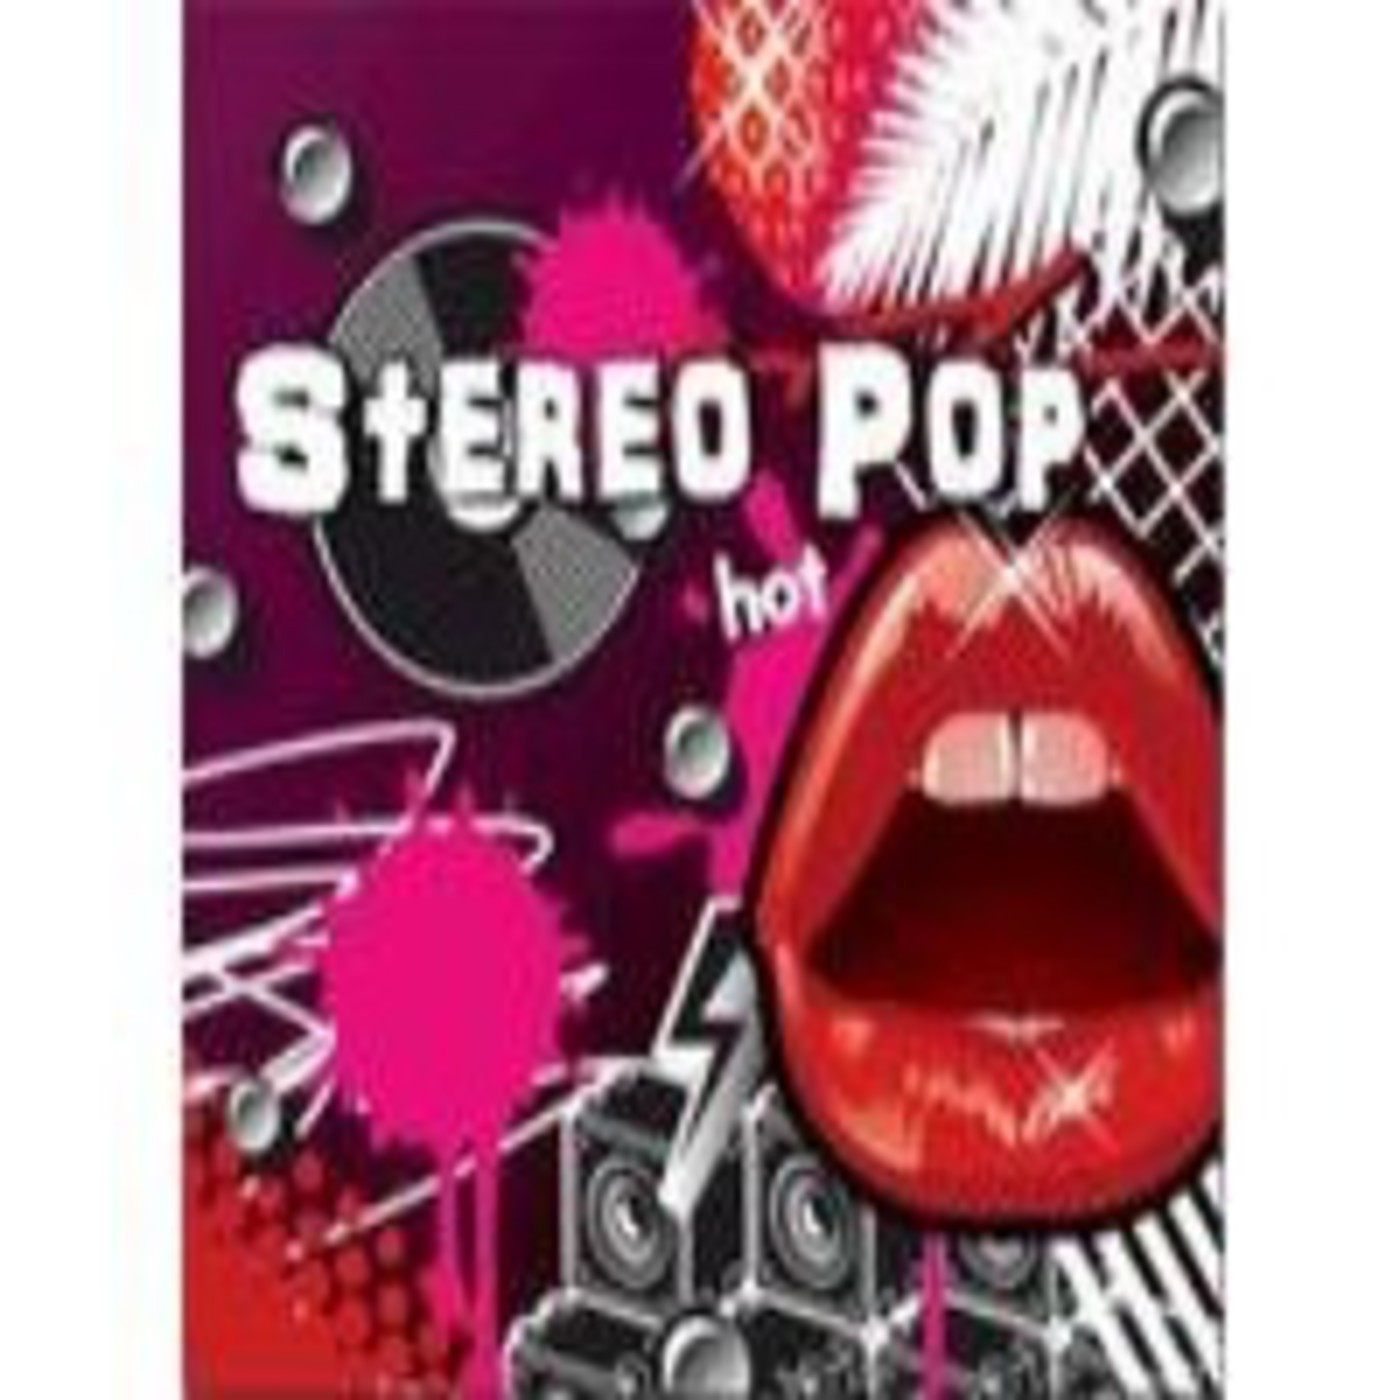 Podcast Stereo Pop